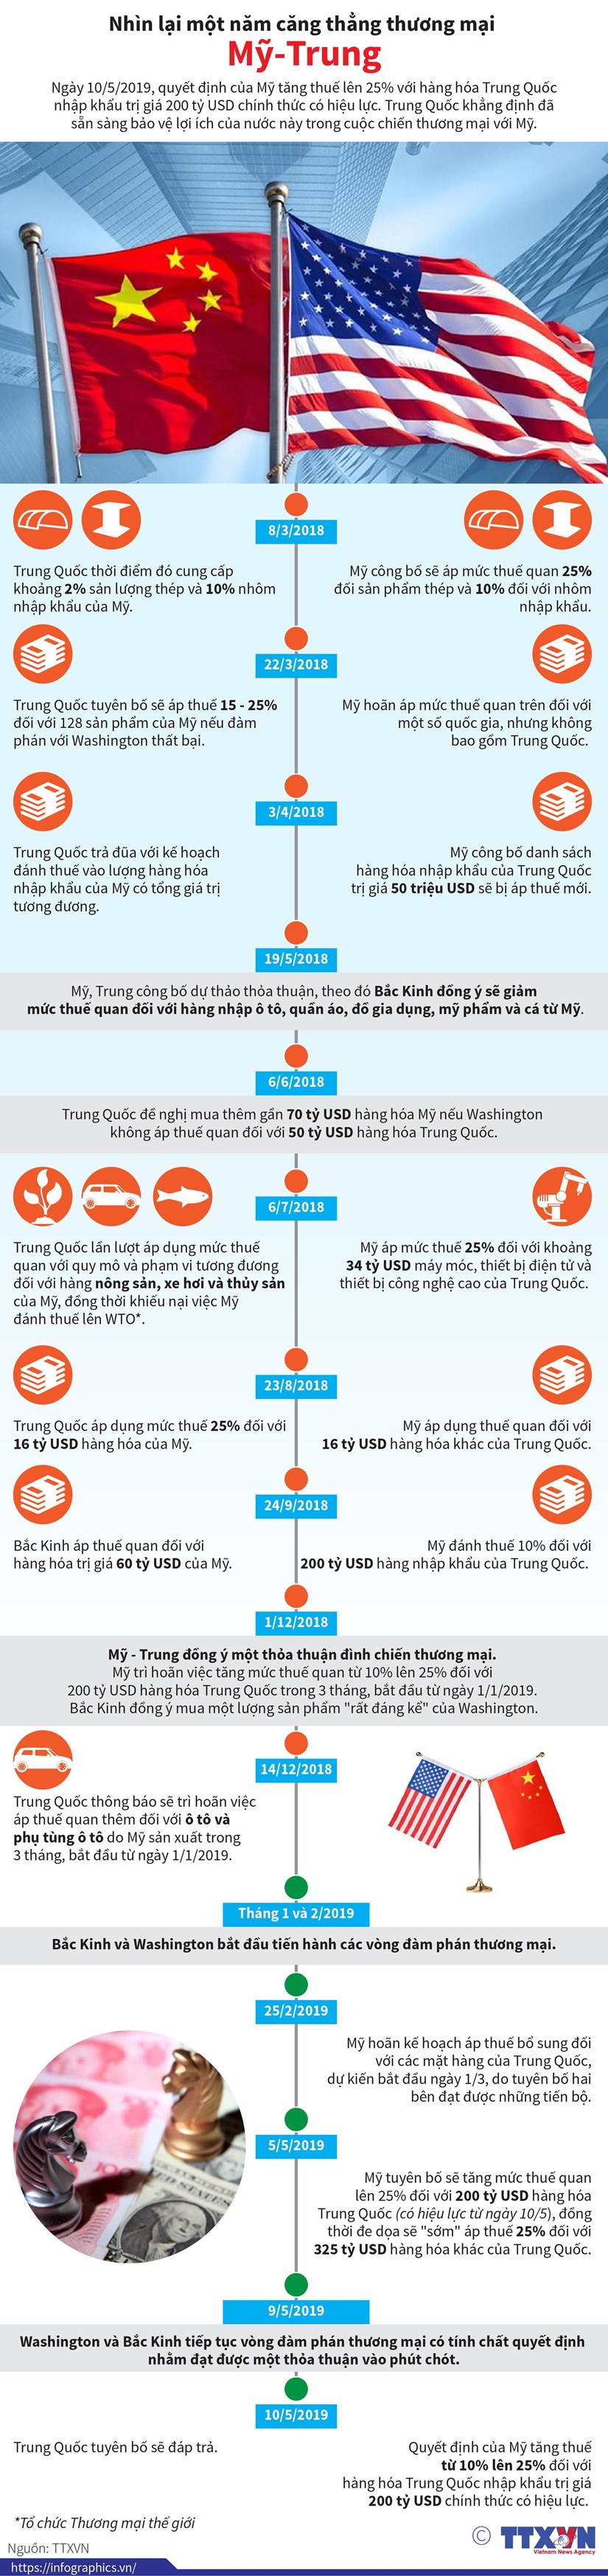 infographics nhin lai mot nam cang thang thuong mai my trung